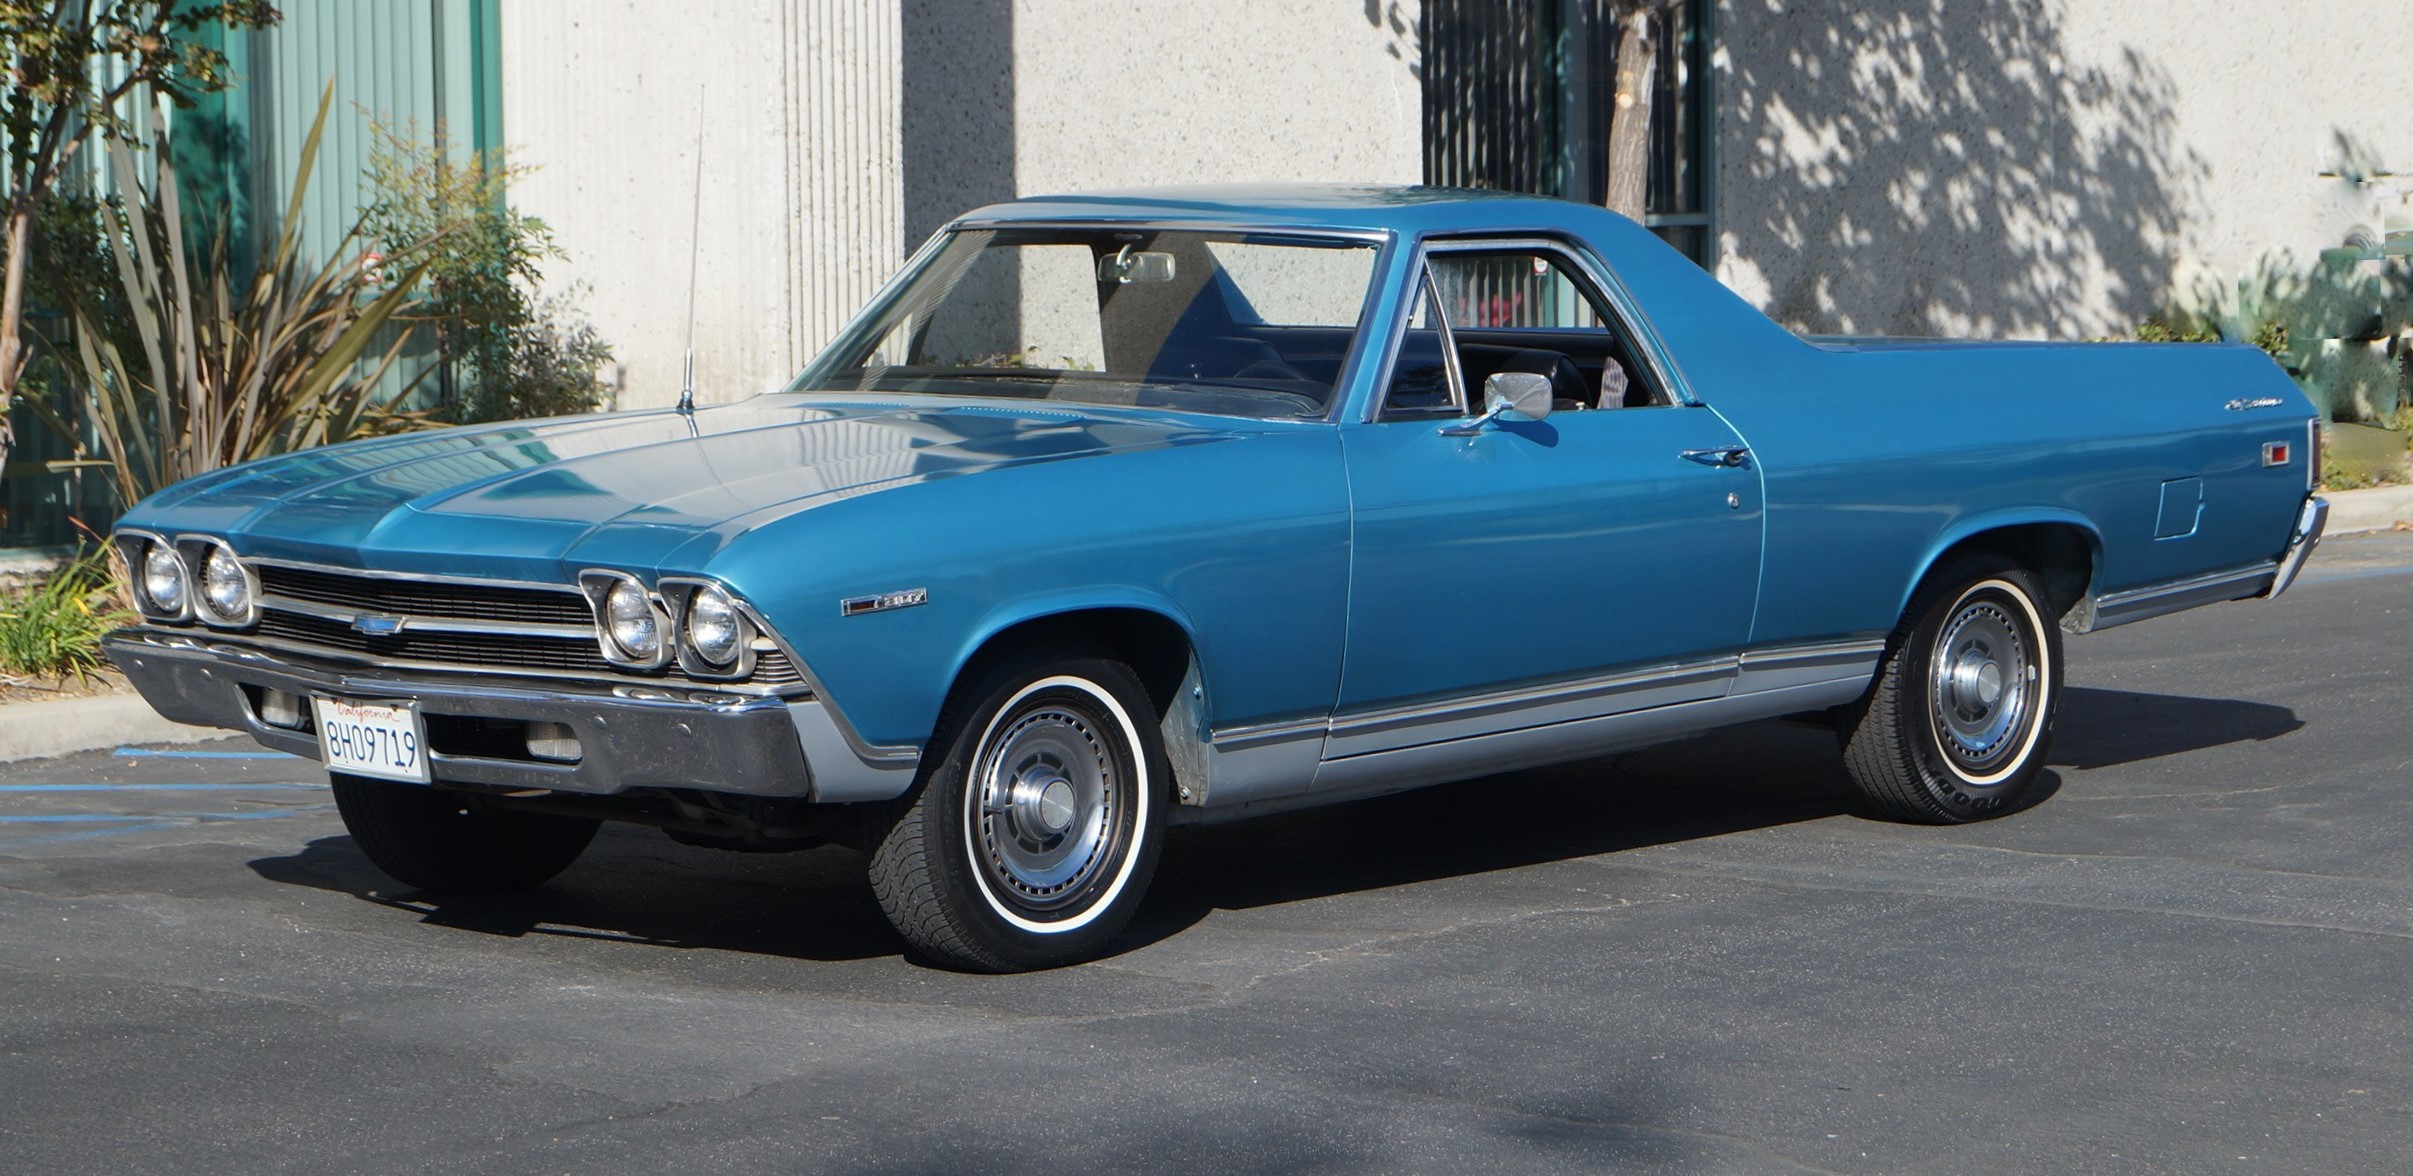 Blue 1969 Chevy El Camino - Sold at Johnston Motorsports